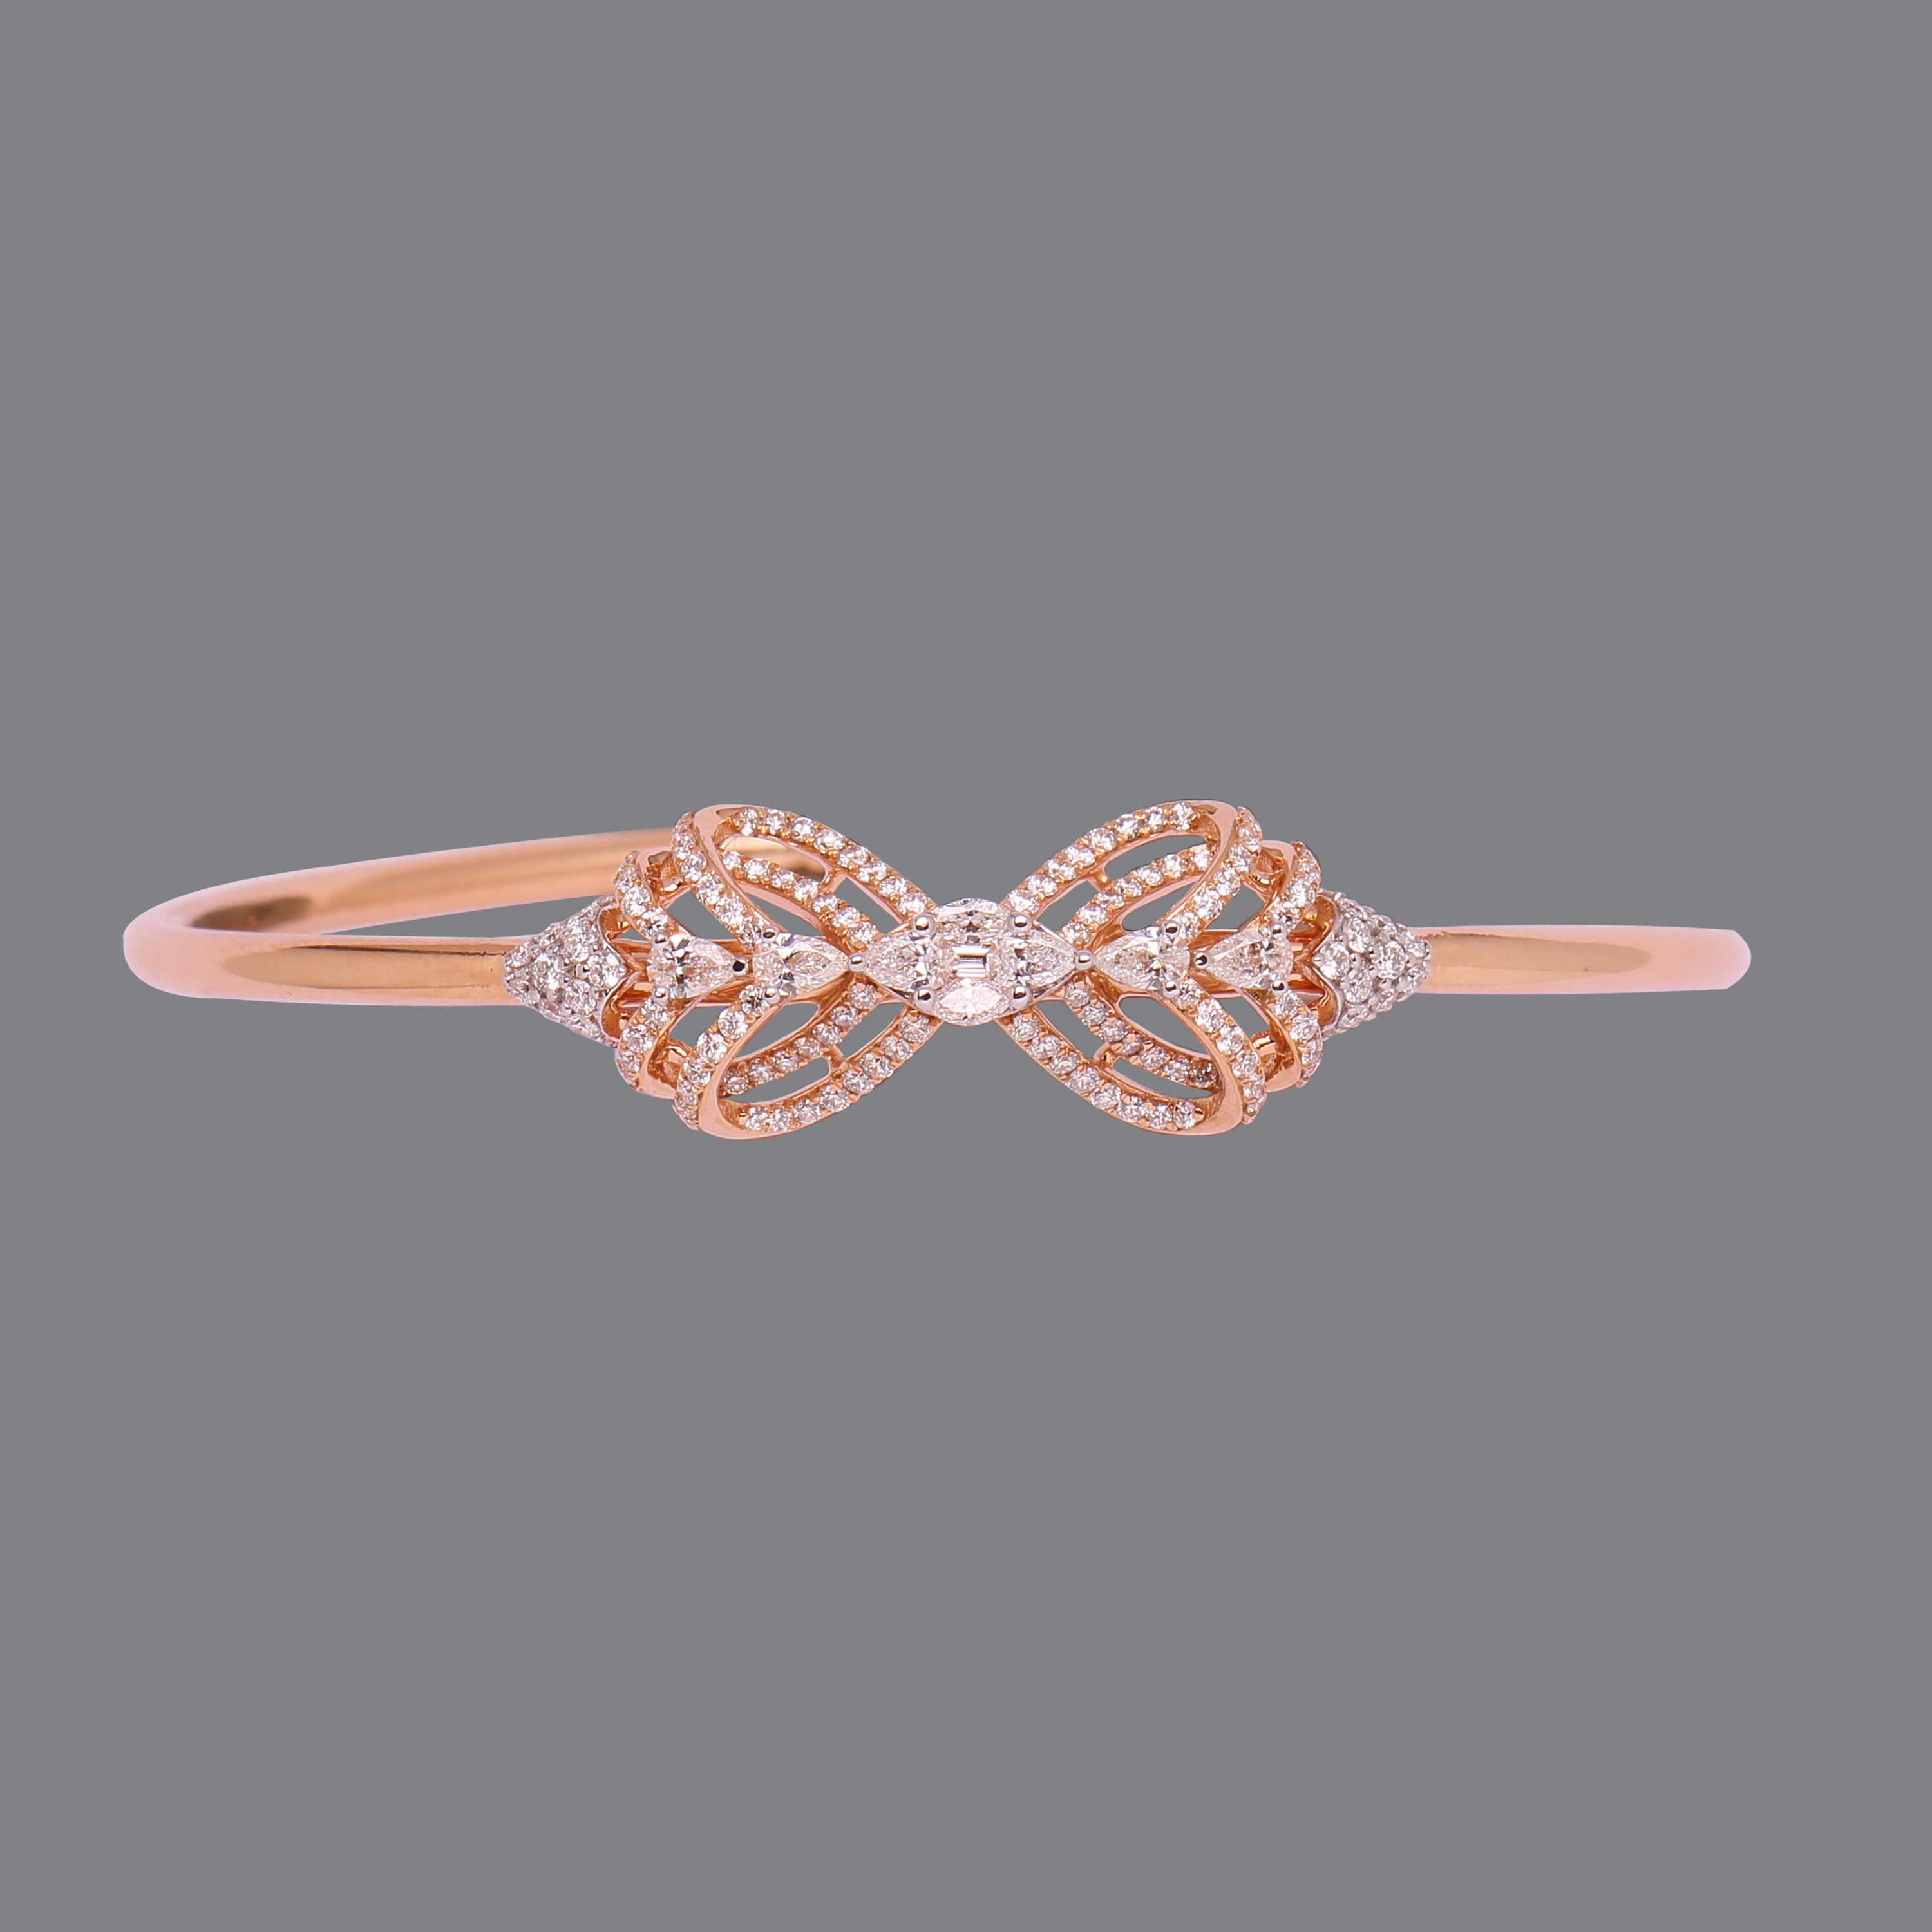 The Curved Layers Diamond Bracelet